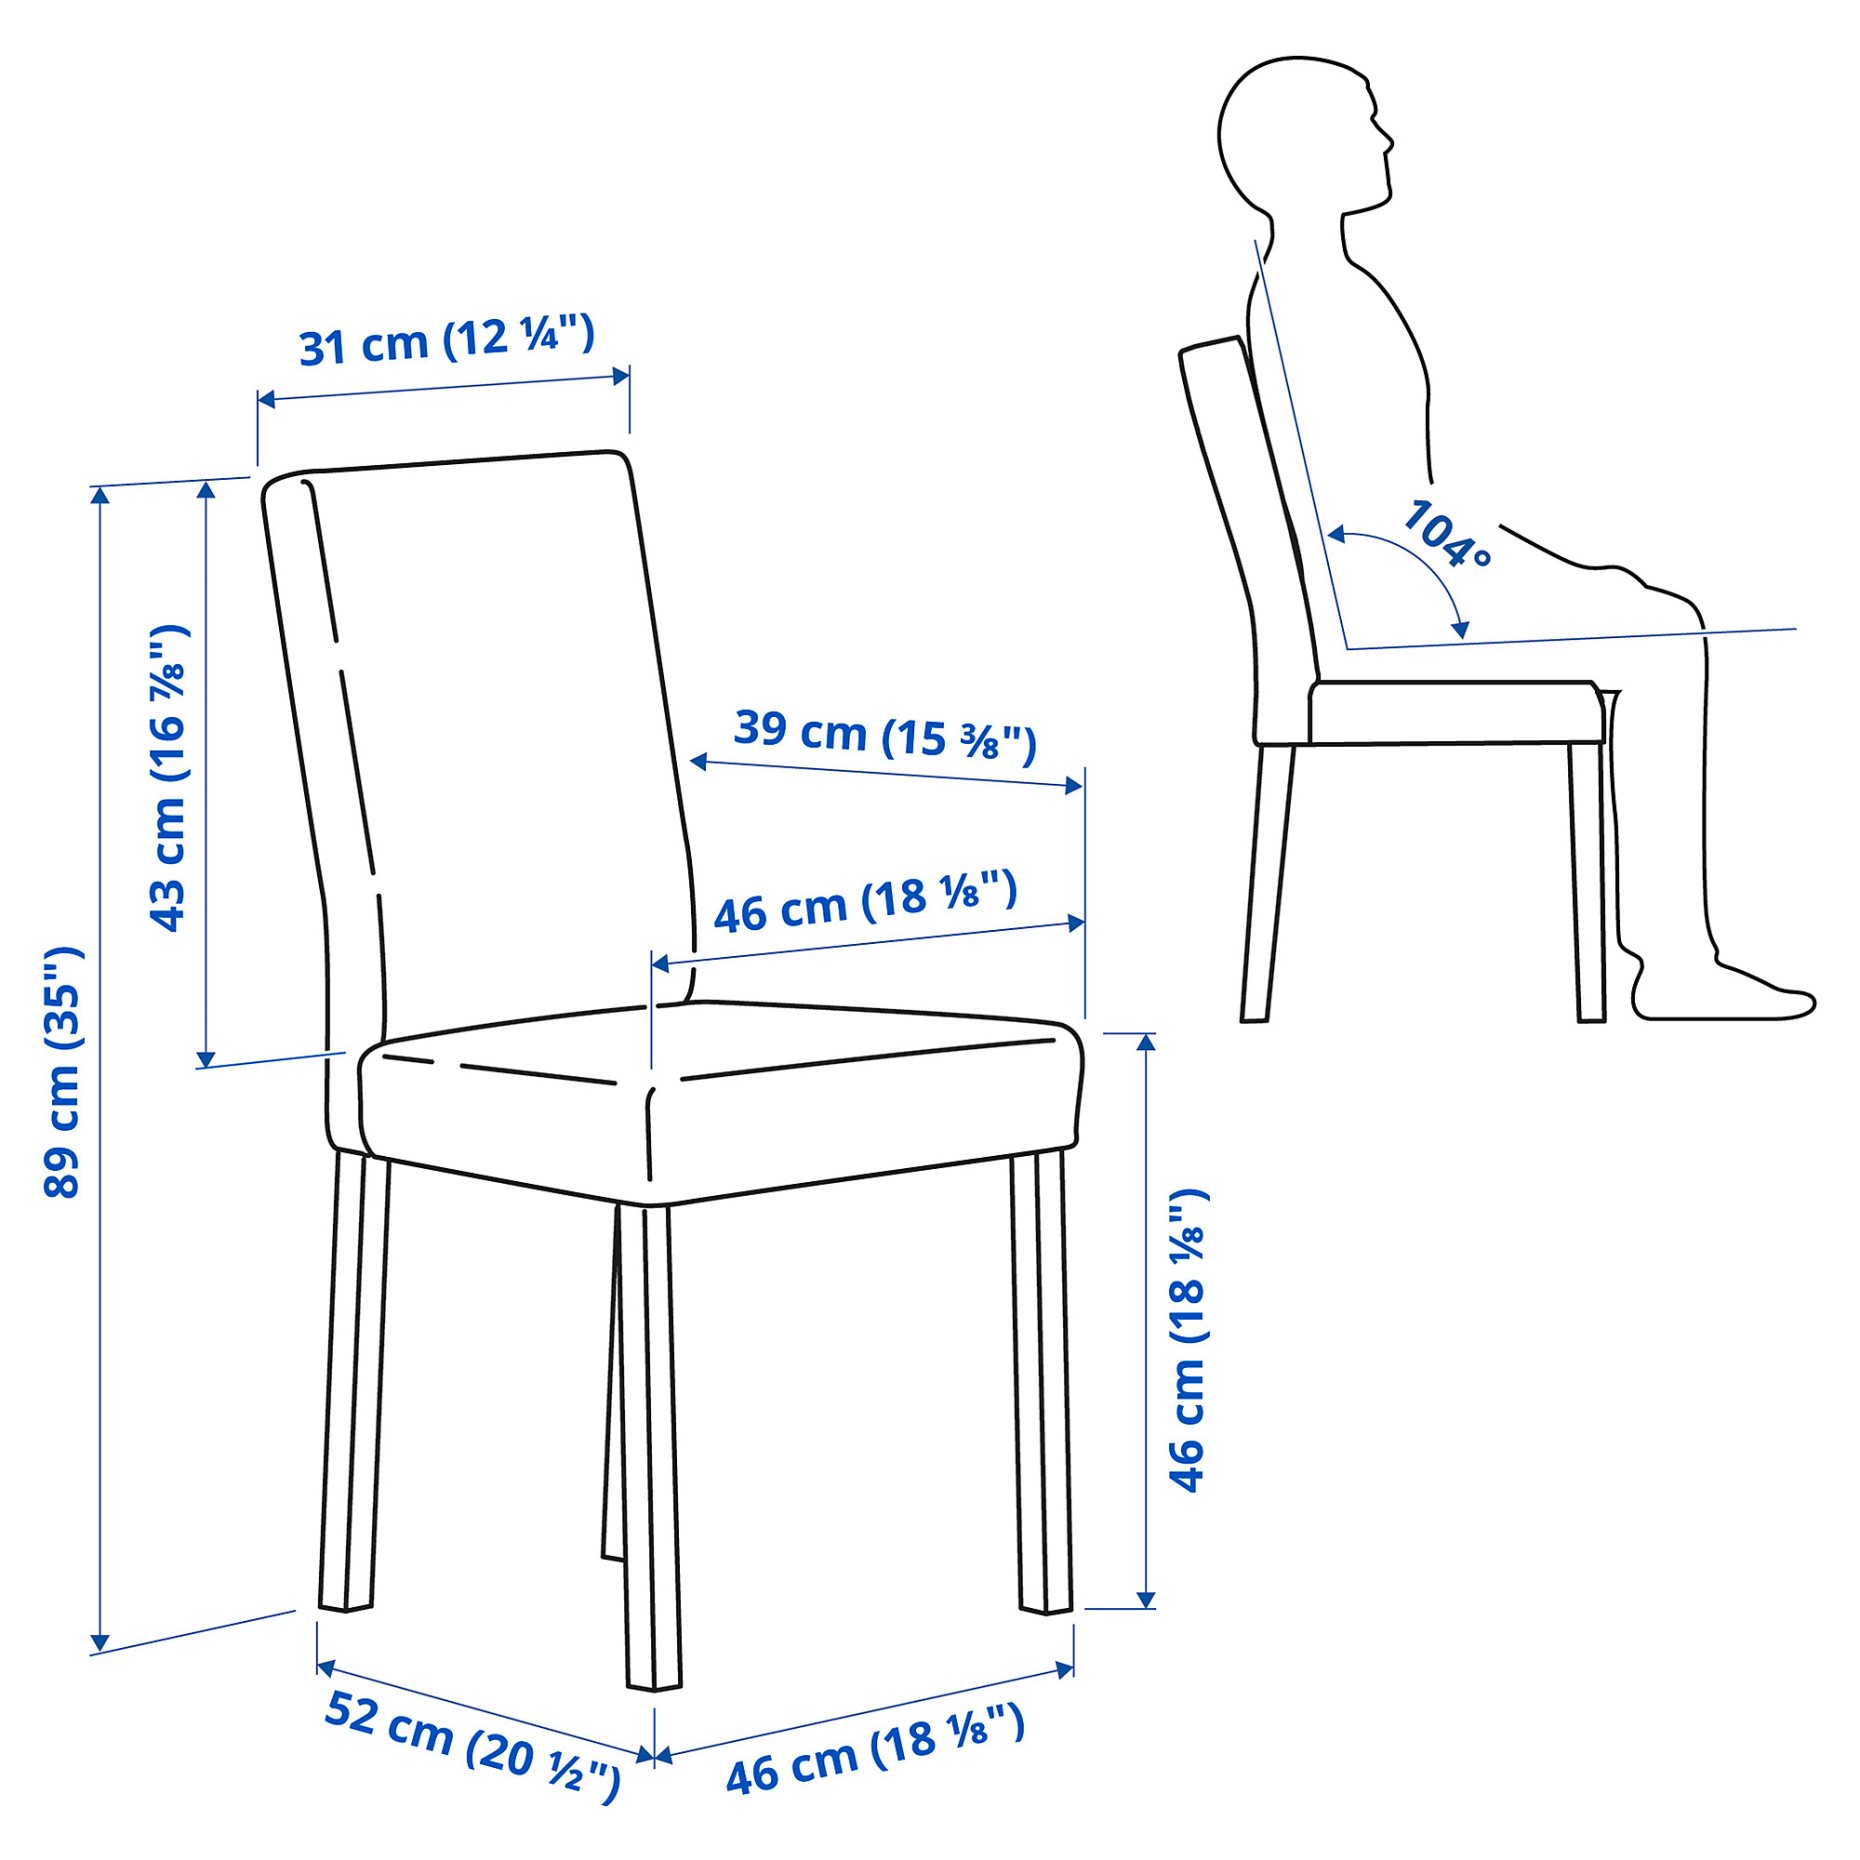 EKEDALEN/KATTIL, τραπέζι και 4 καρέκλες, 120/180 cm, 994.288.14